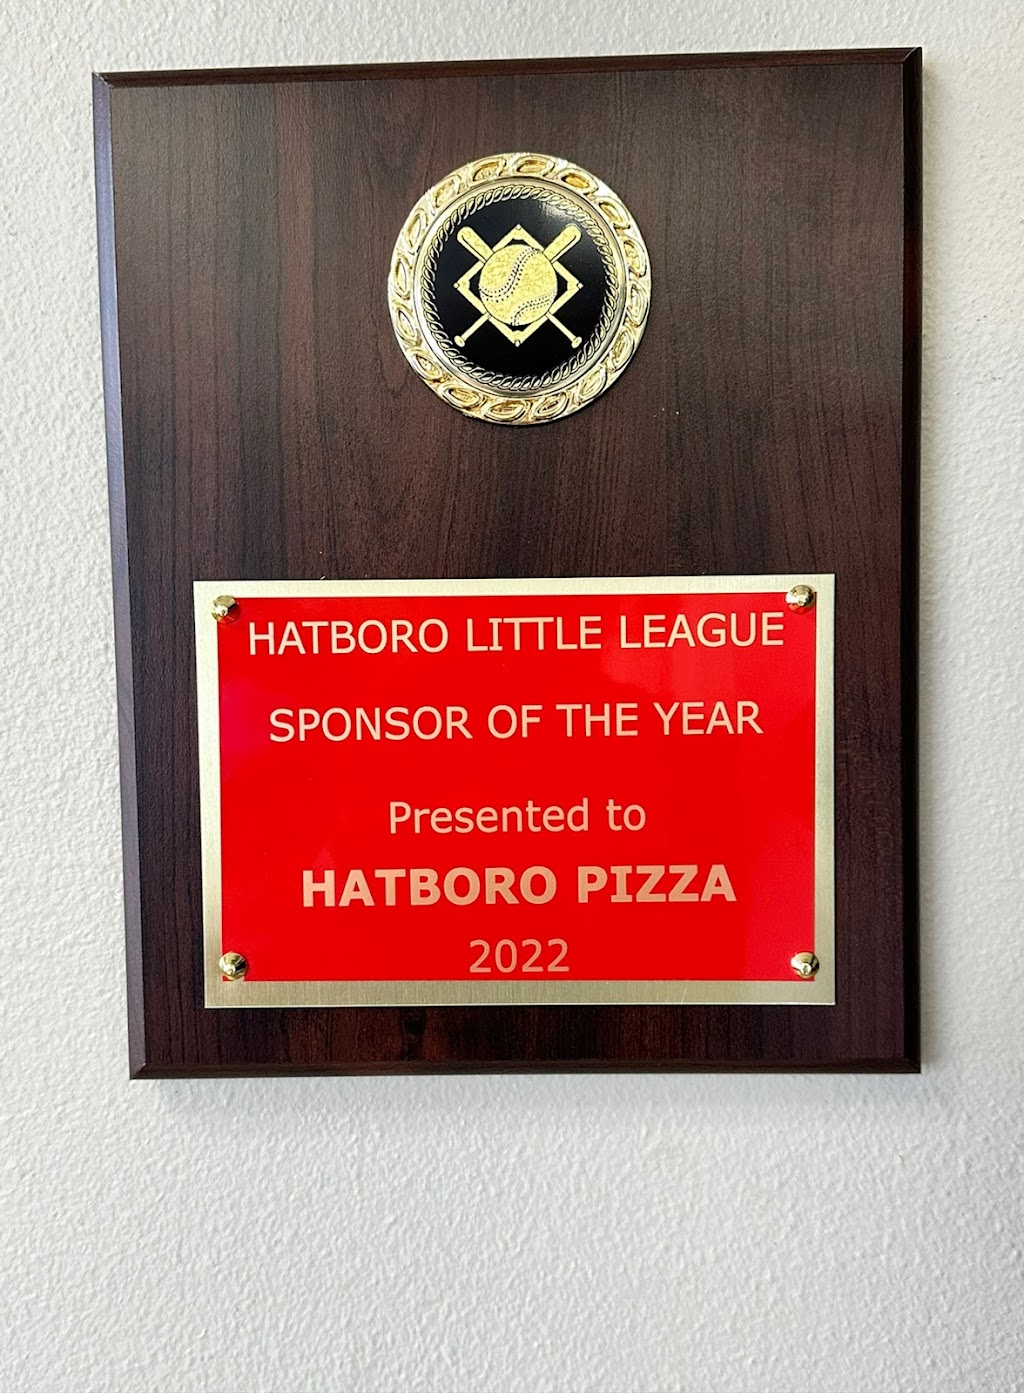 Hatboro Pizza | 213 N York Rd, Hatboro, PA 19040 | Phone: (215) 442-7824